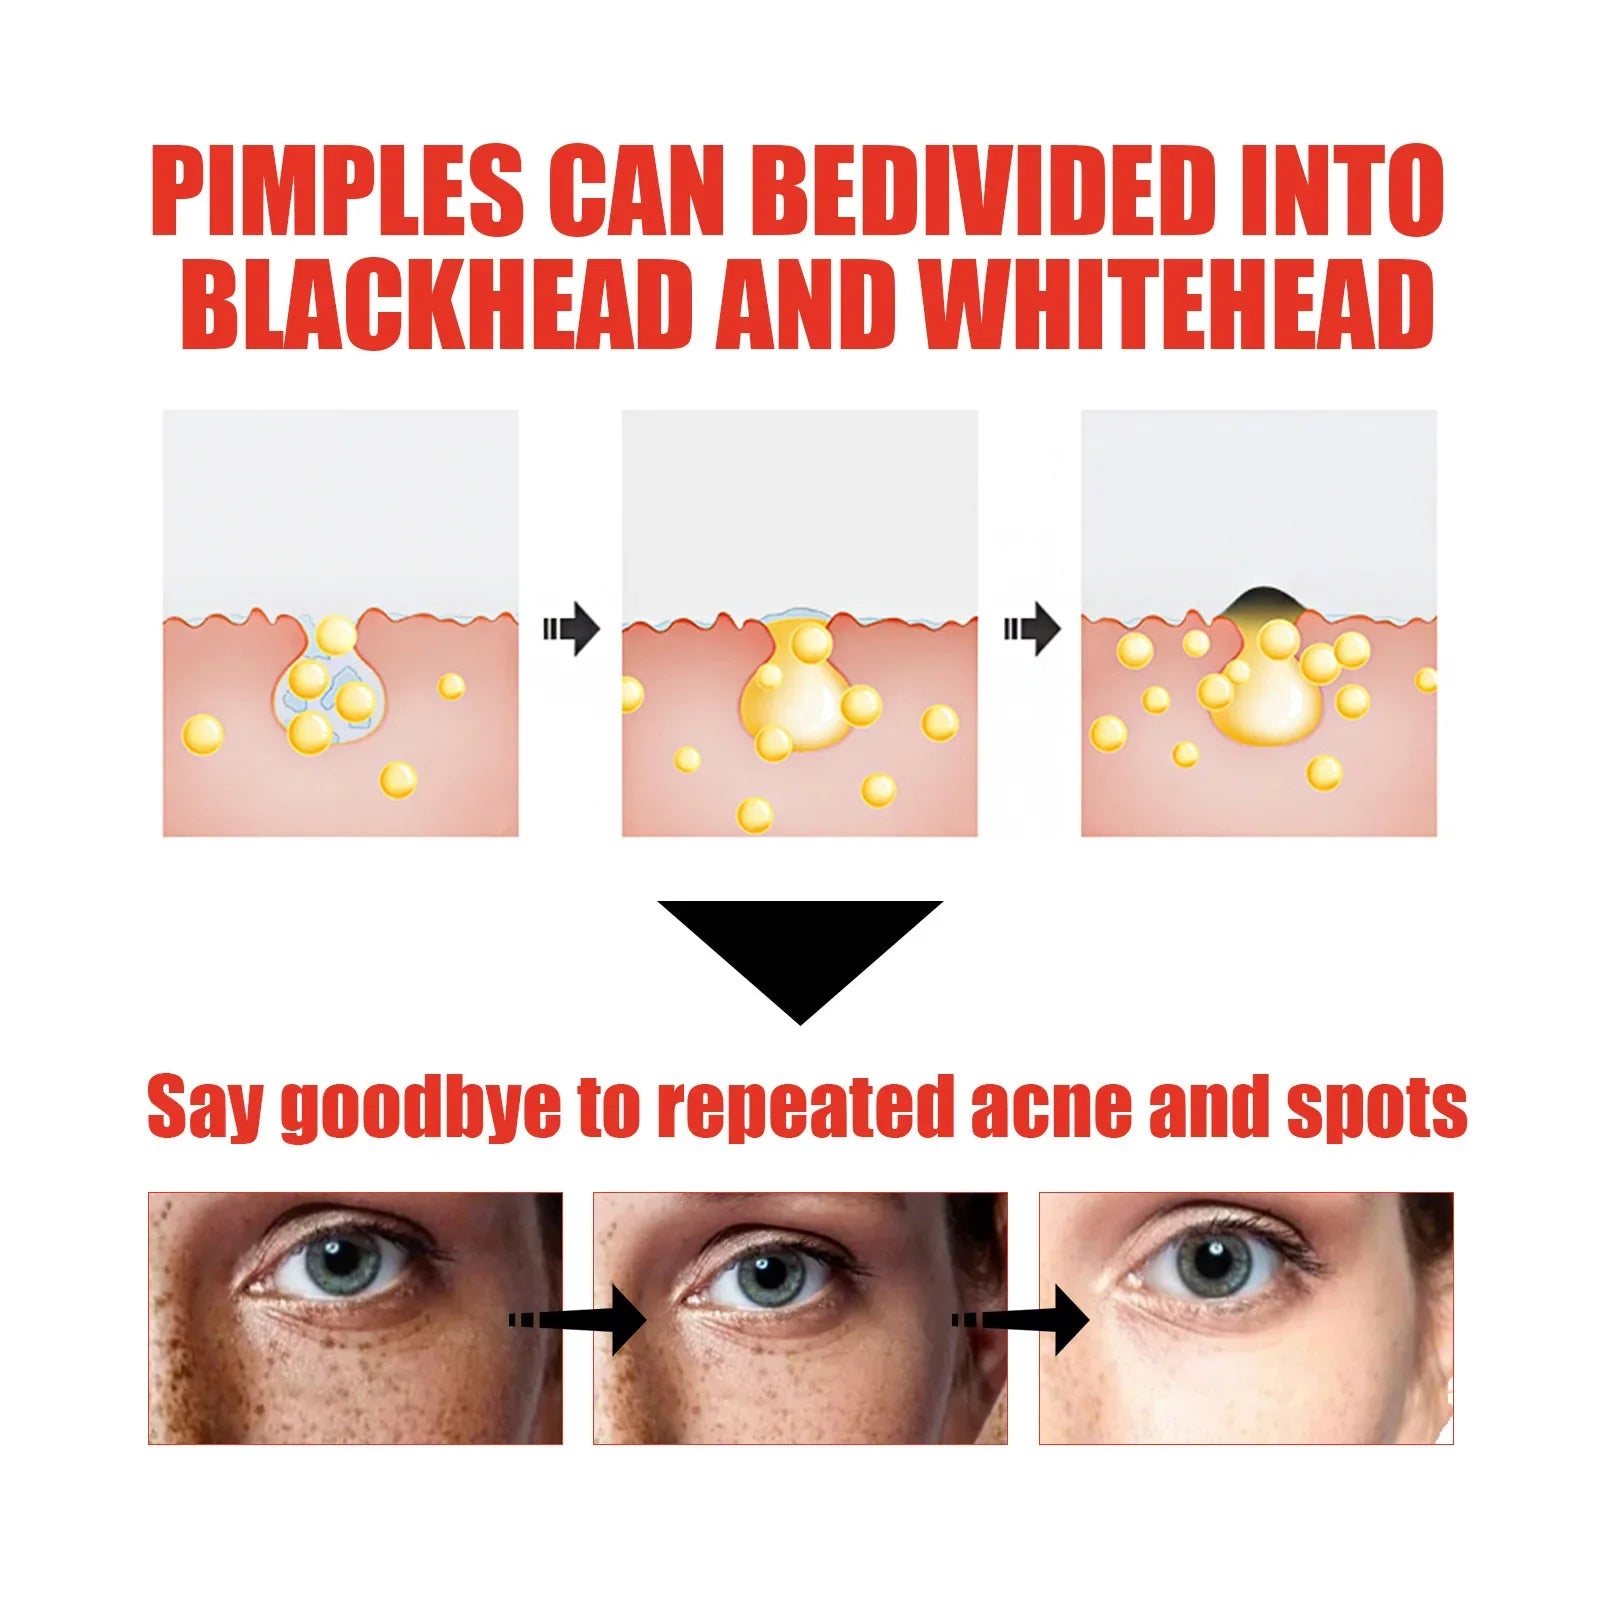 Niacinamida Whitening Face Serum Freckles Dark Spot Remover Salicylic Acid Pore Shrink Moisturizing Korean Skin Care Product30ml